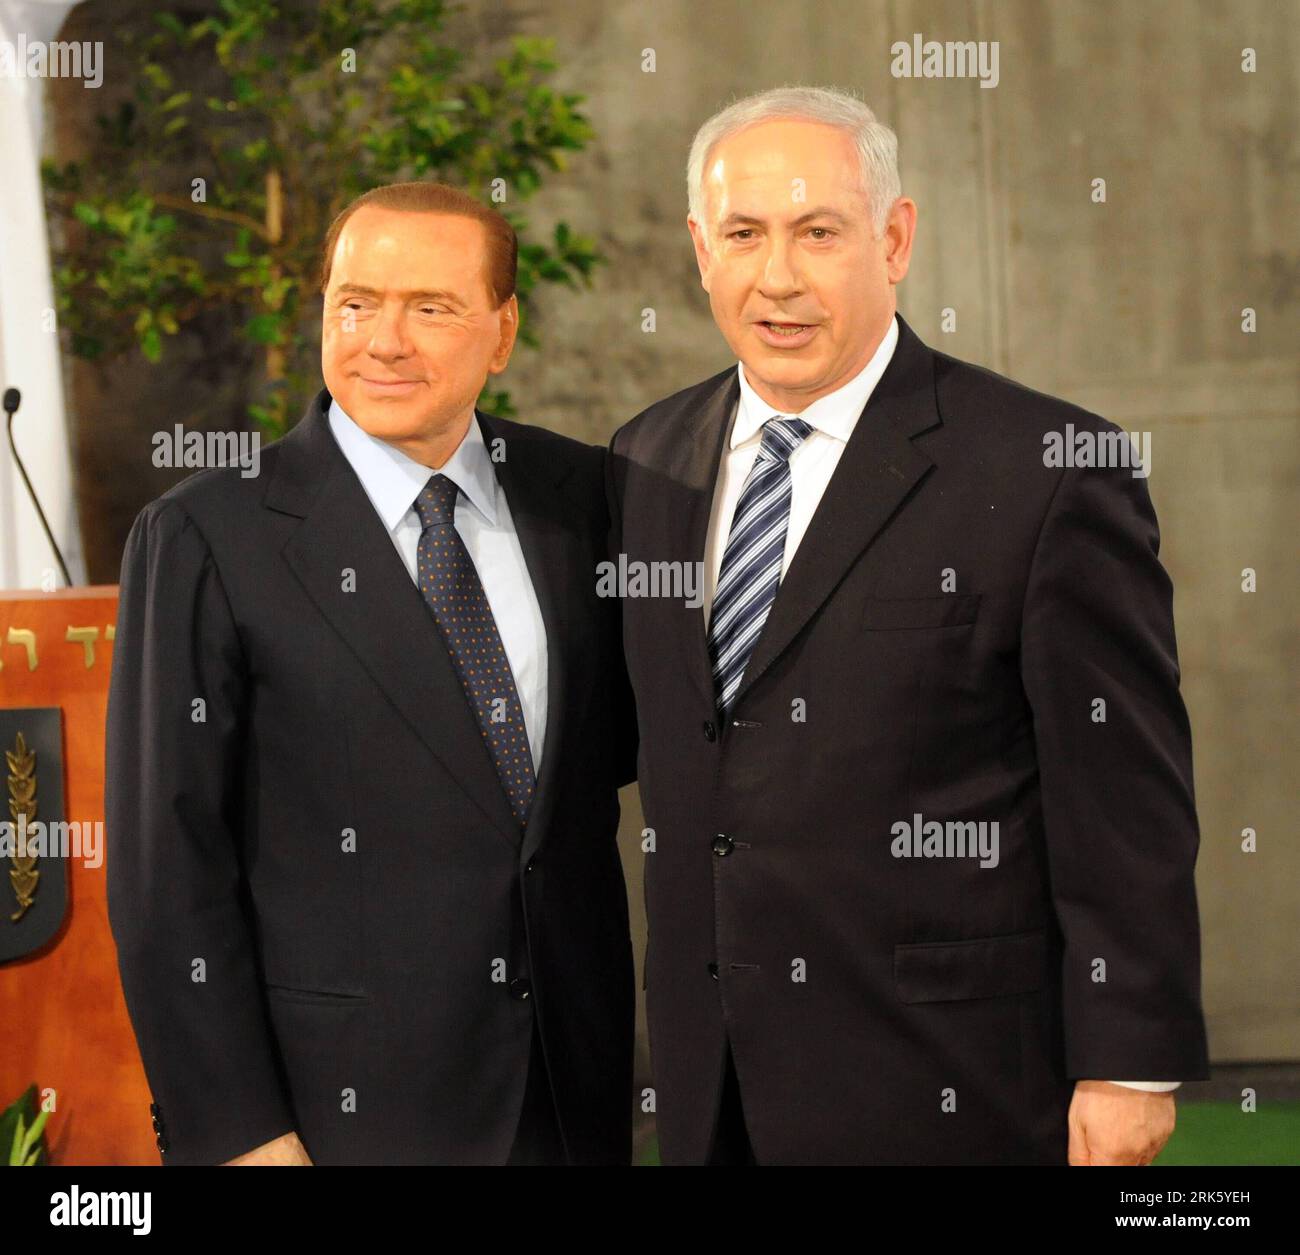 Bildnummer: 53770173  Datum: 01.02.2010  Copyright: imago/Xinhua (100201) -- JERUSALEM, Feb. 1, 2010 (Xinhua) -- Israeli Prime Minister Benjamin Netanyahu (R) stands with his Italian counterpart Silvio Berlusconi during a welcoming ceremony in Jerusalem, Feb. 1, 2010. (Xinhua/pool/Debbie Hill) (zw) (1)MIDEAST-ISRAEL-ITALY-BERLUSCONI-VISIT PUBLICATIONxNOTxINxCHN People Politik kbdig xkg 2010 quadrat     Bildnummer 53770173 Date 01 02 2010 Copyright Imago XINHUA 100201 Jerusalem Feb 1 2010 XINHUA Israeli Prime Ministers Benjamin Netanyahu r stands With His Italian Part Silvio Berlusconi during a Stock Photo